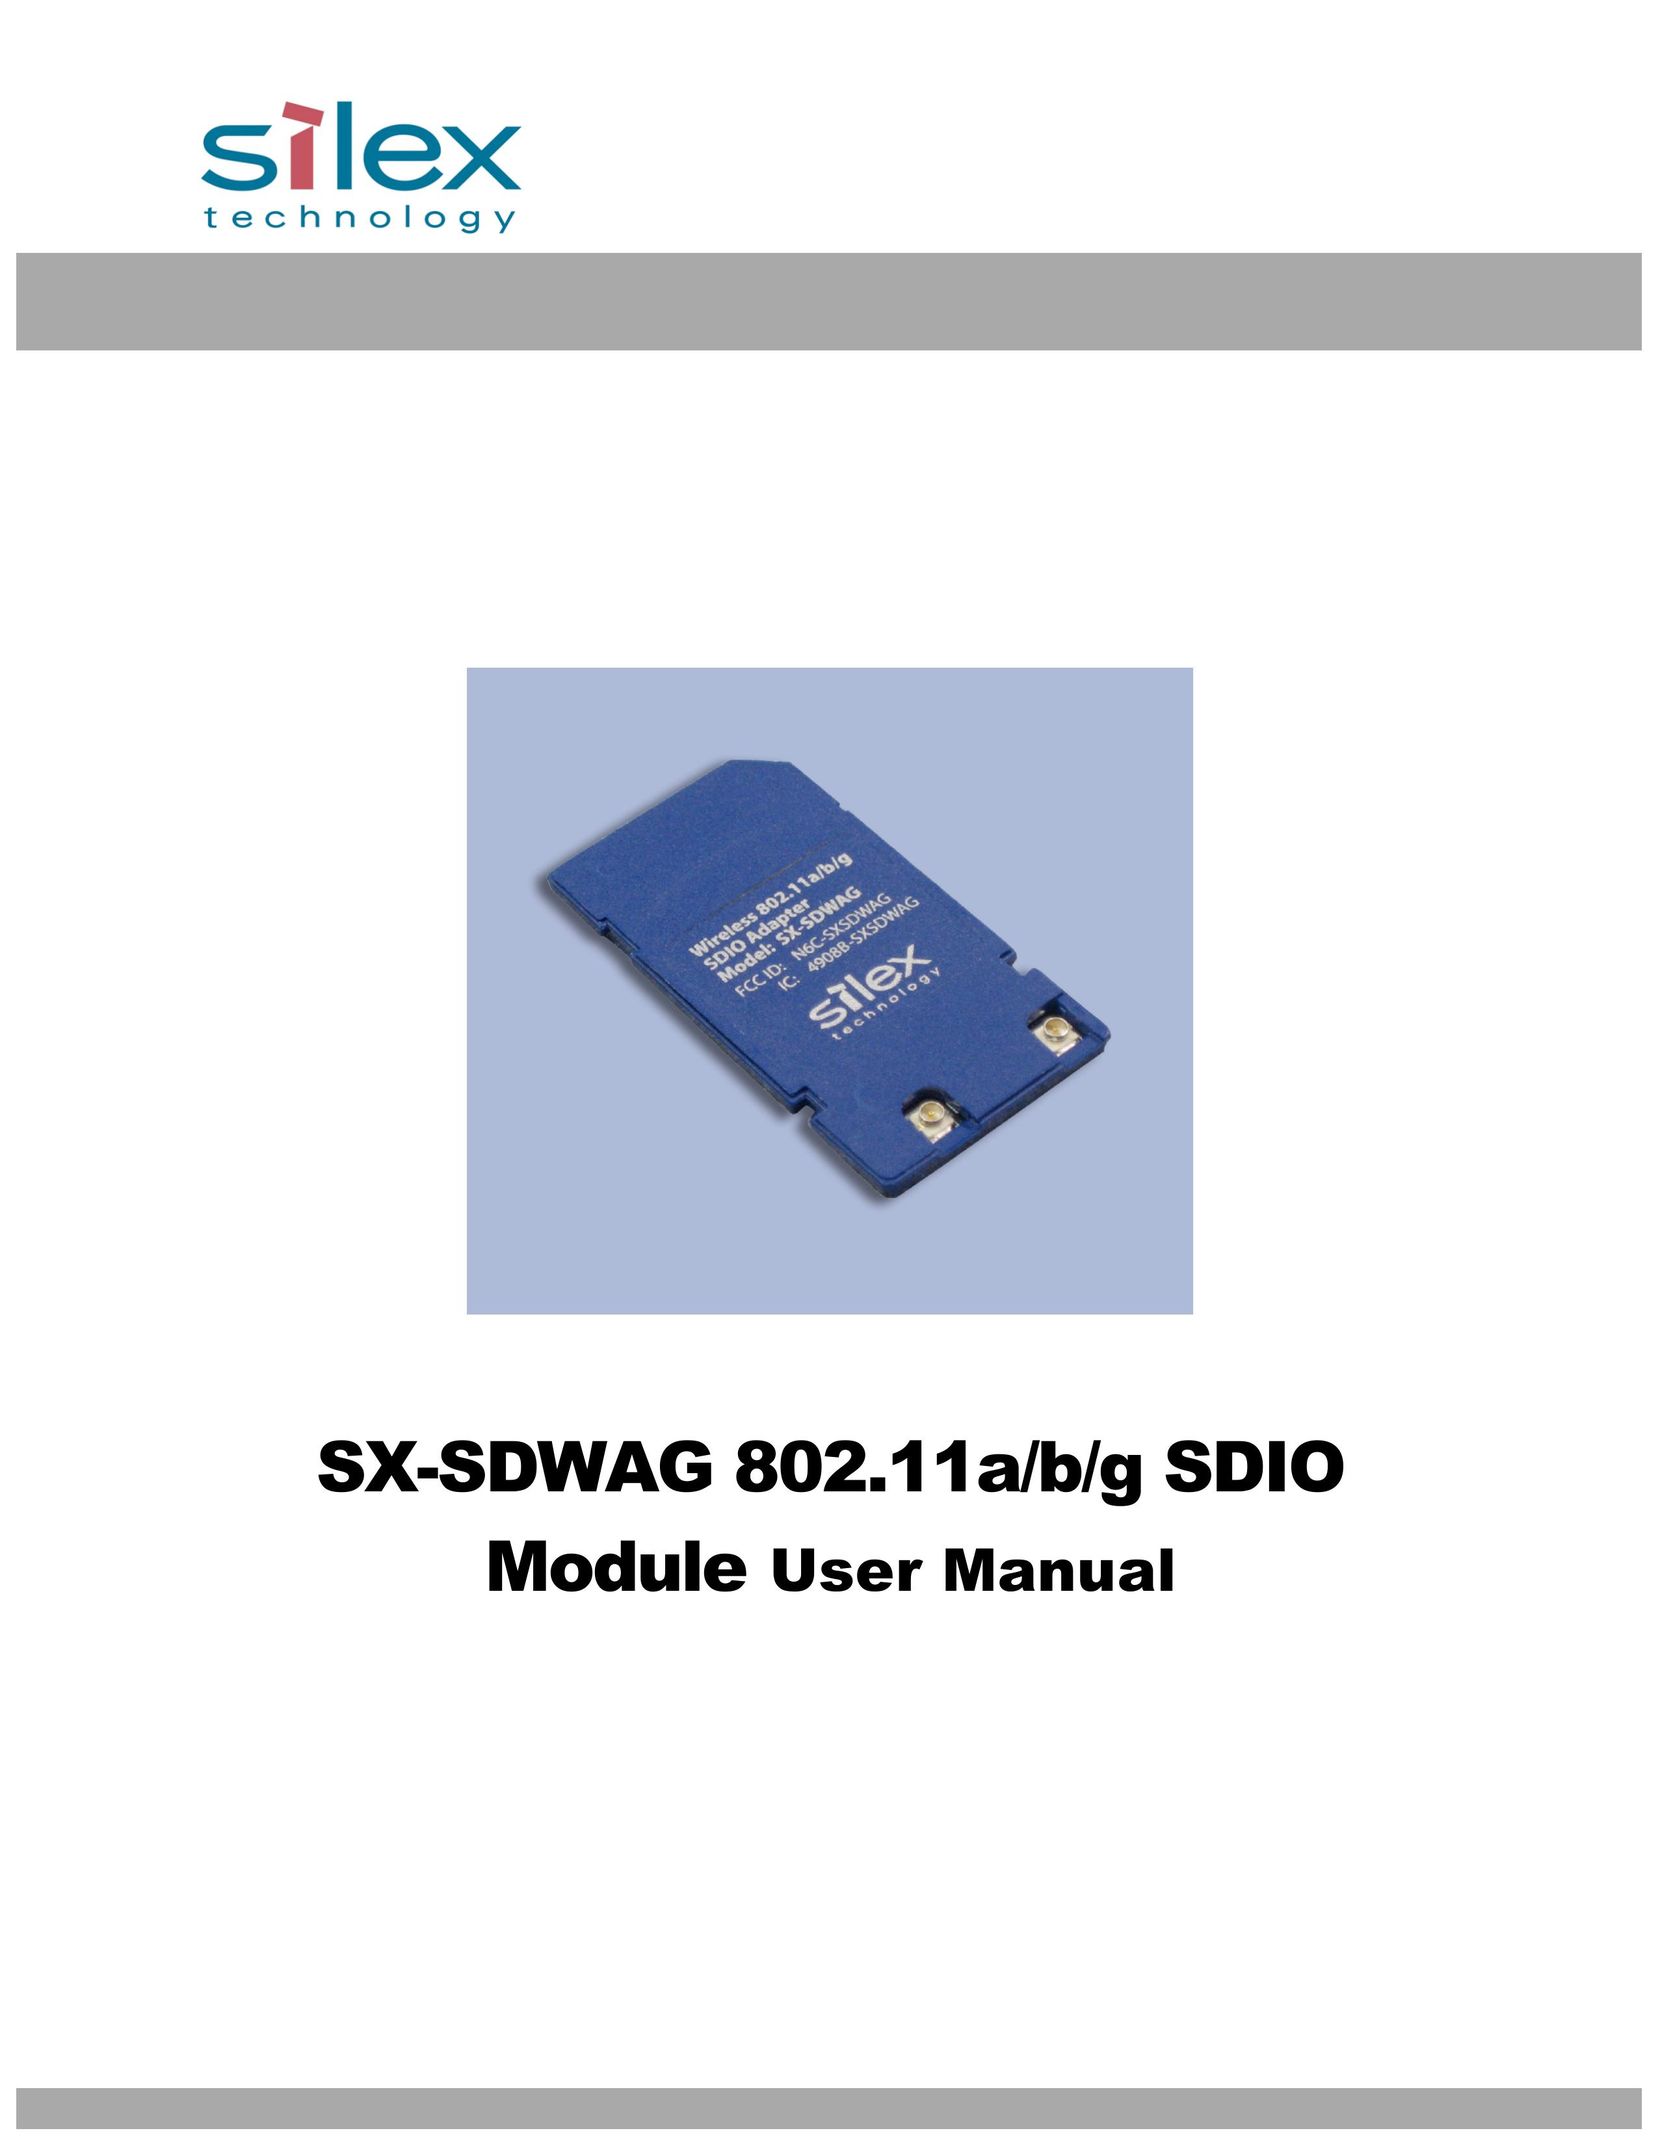 Silex technology SX-SDWAG Network Card User Manual